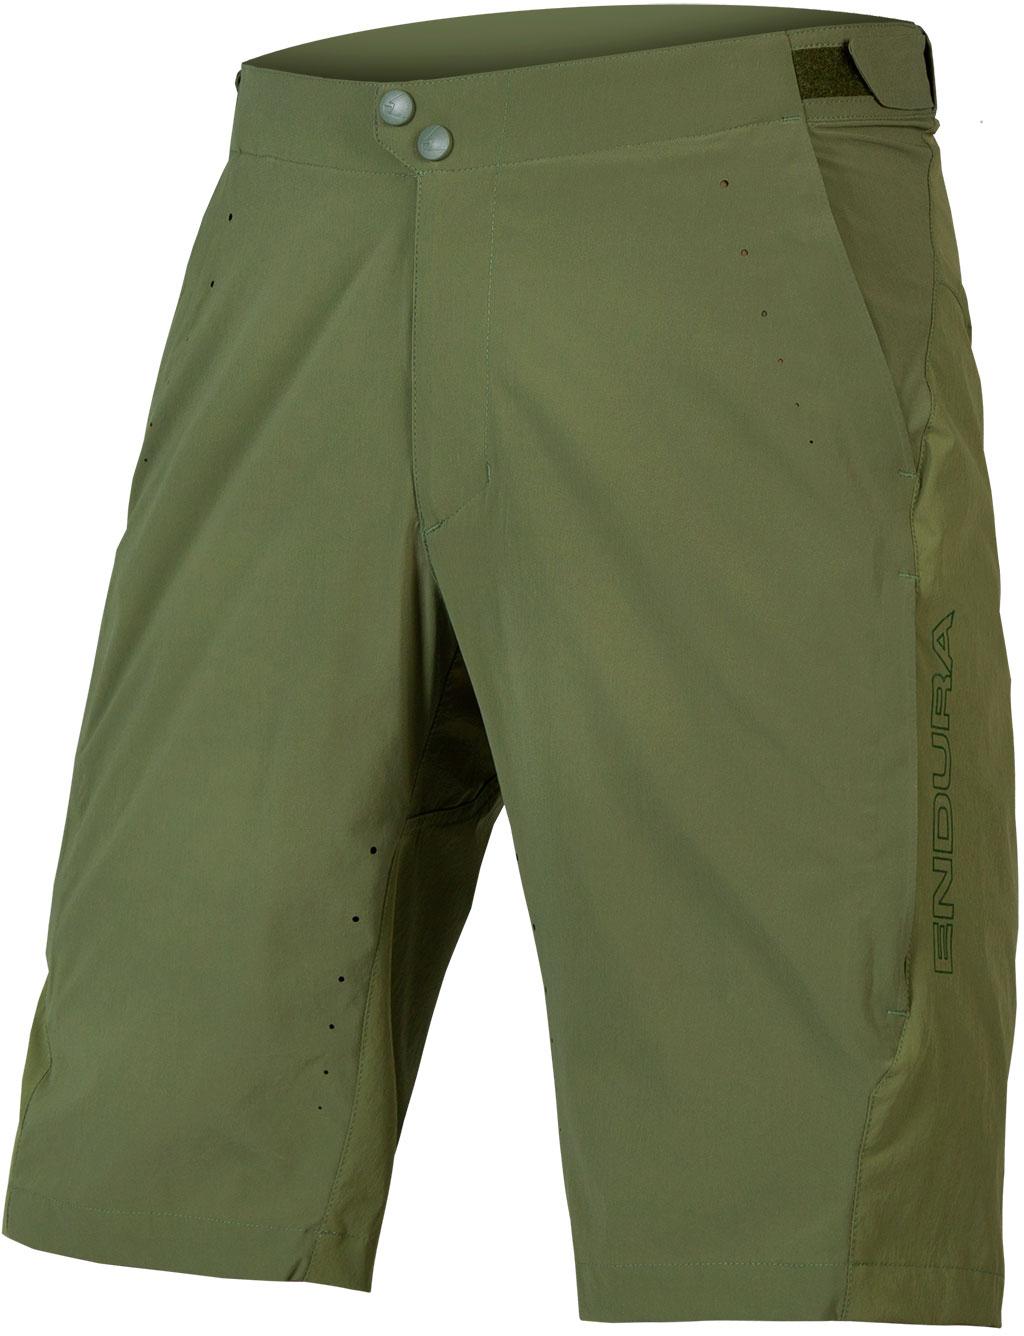 Endura Gv500 Foyle Shorts  Olive Green